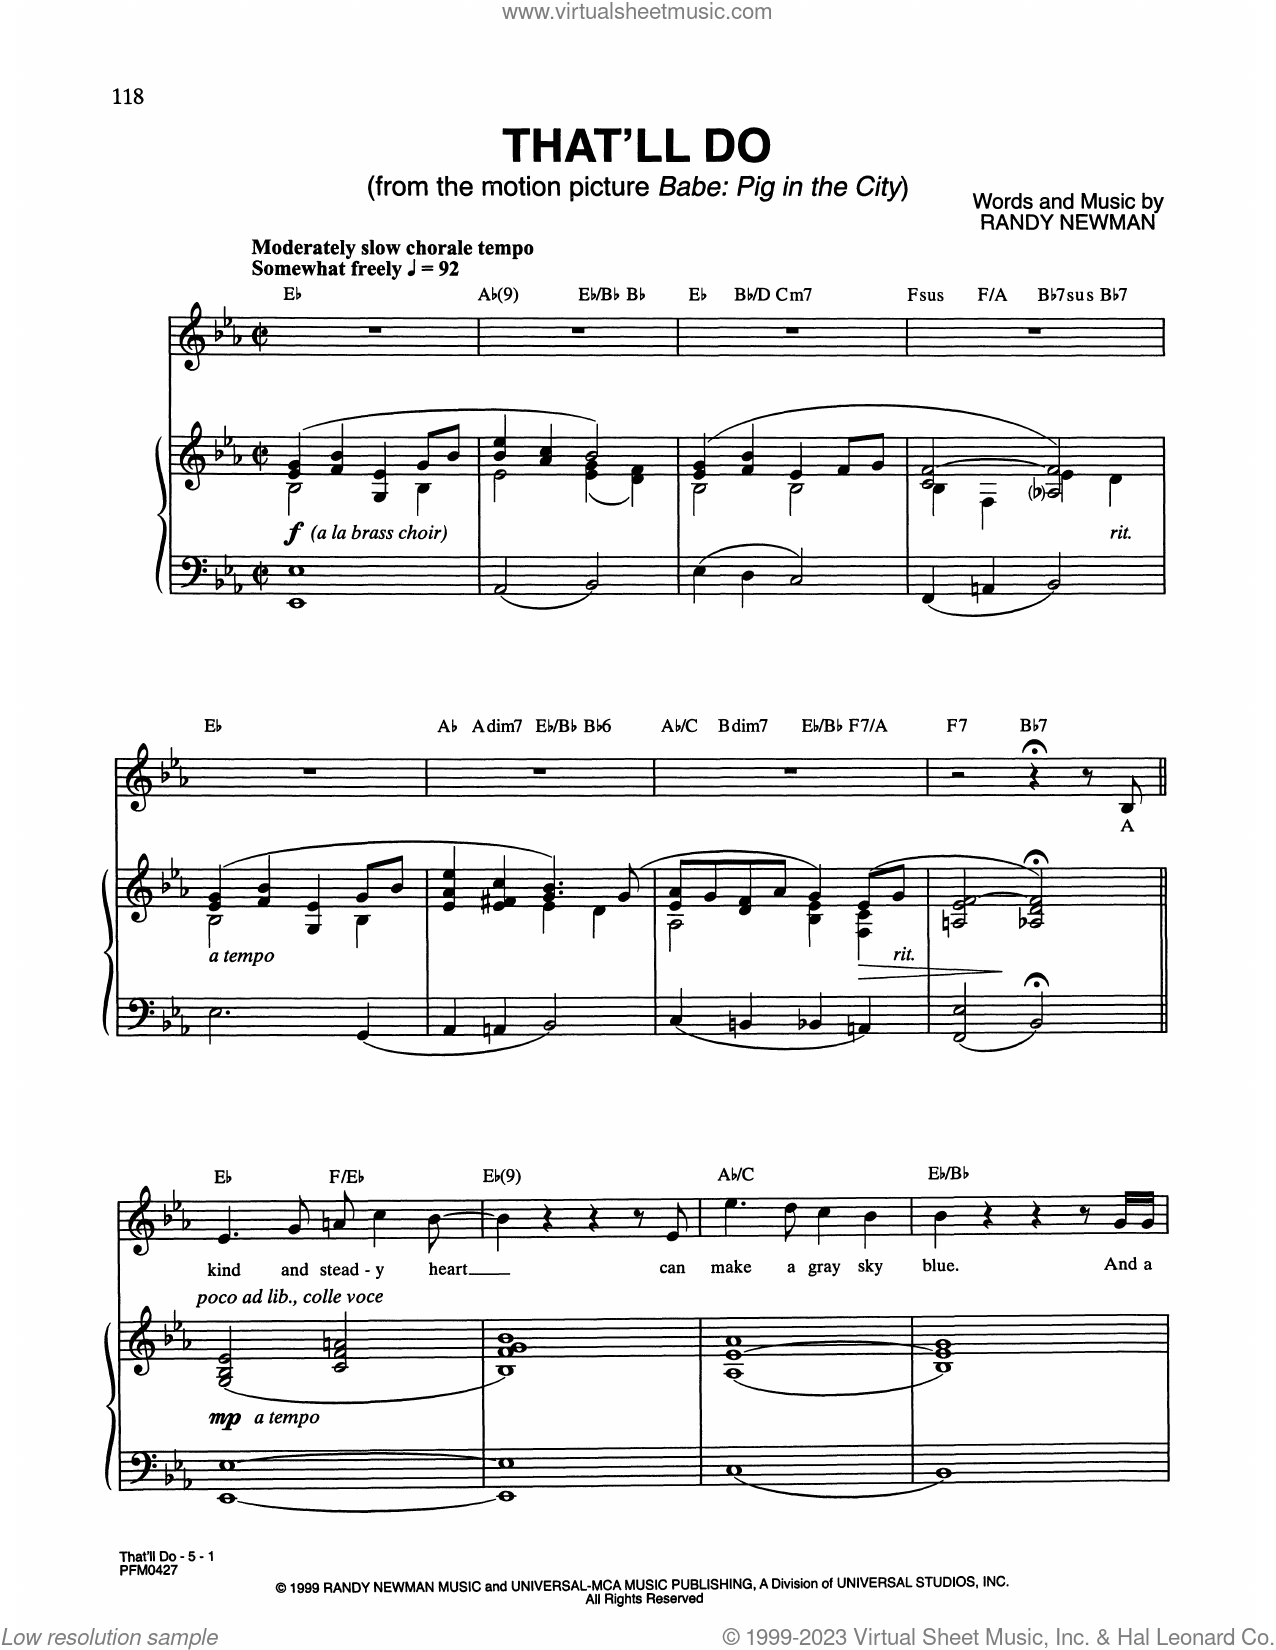 Ella Fitzgerald Midnight Sun Sheet Music in Ab Major